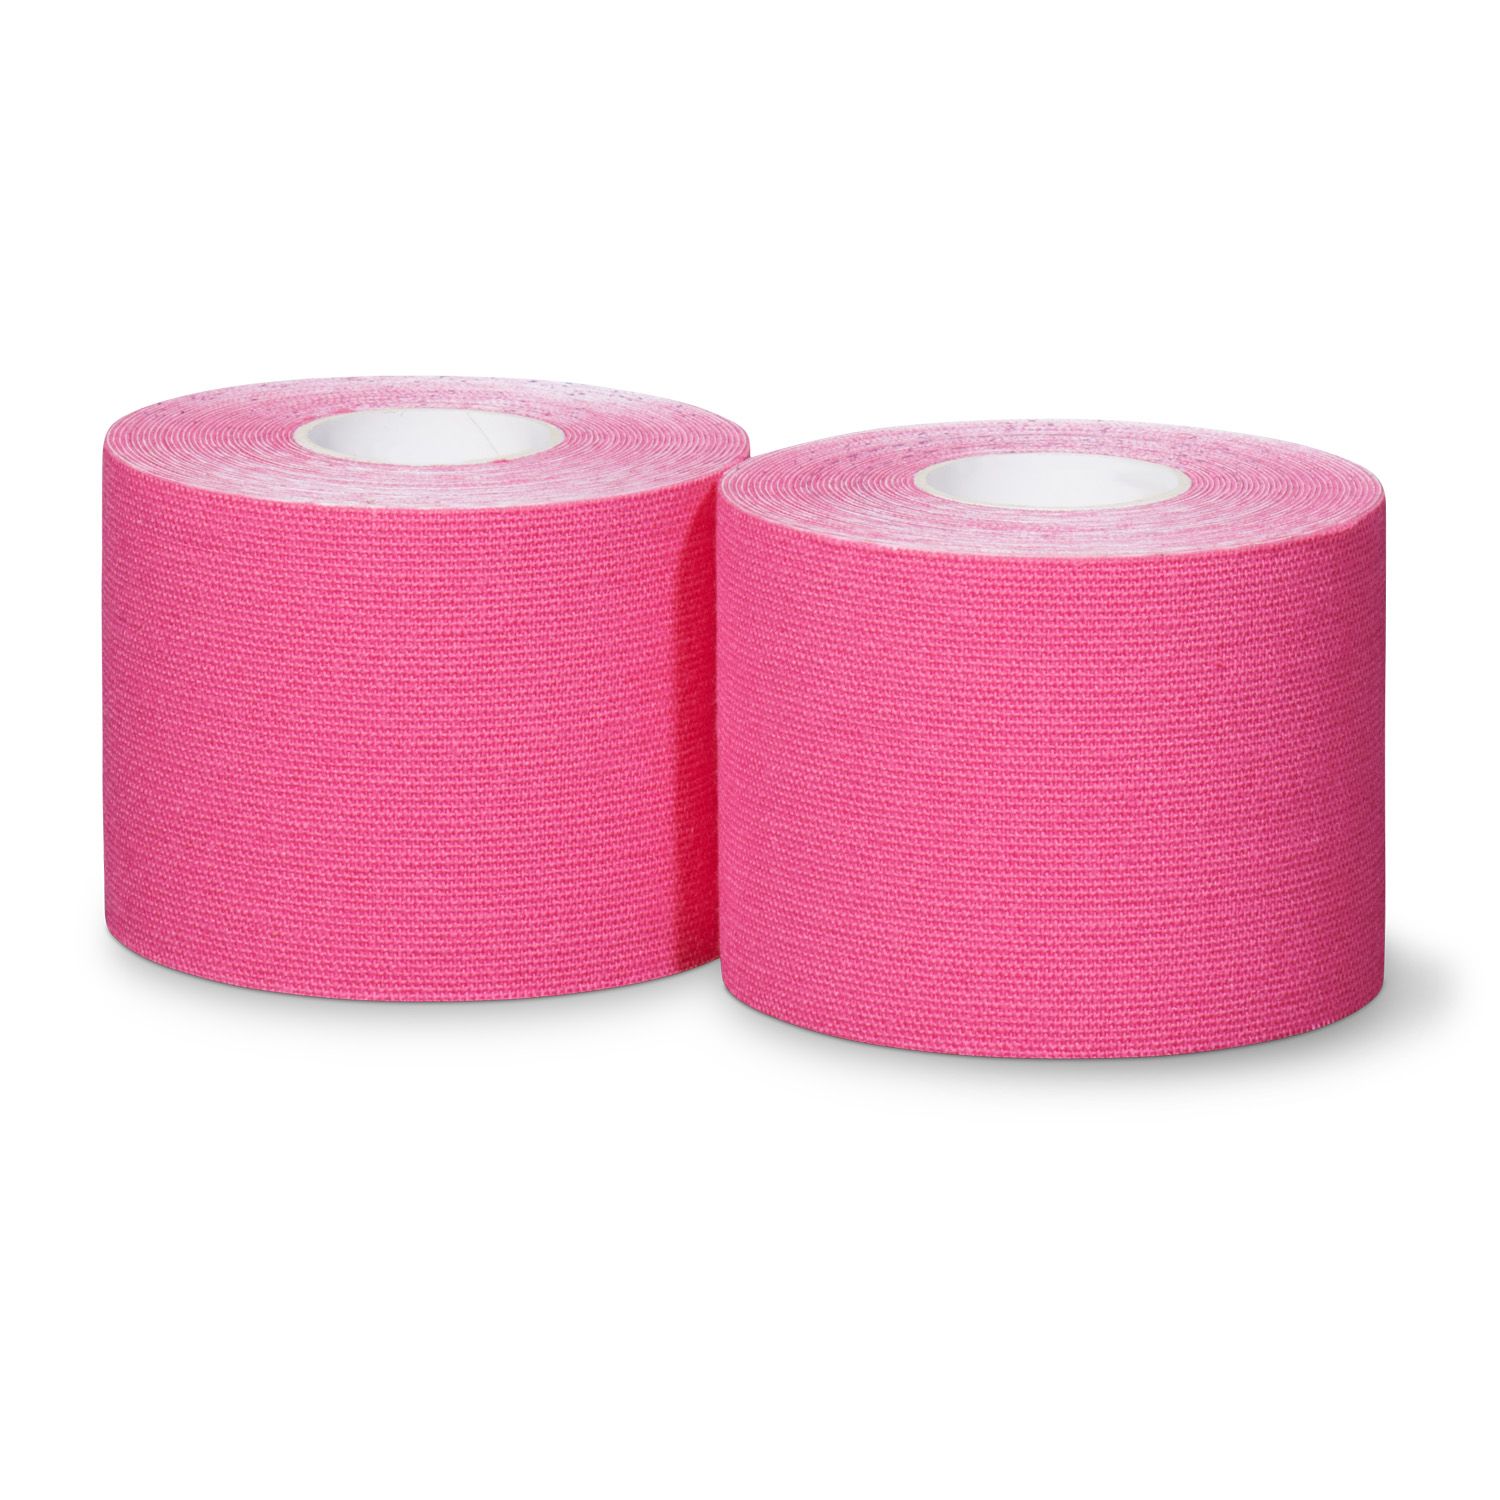 gladiator sports kinesiology tape twelve rolls pink